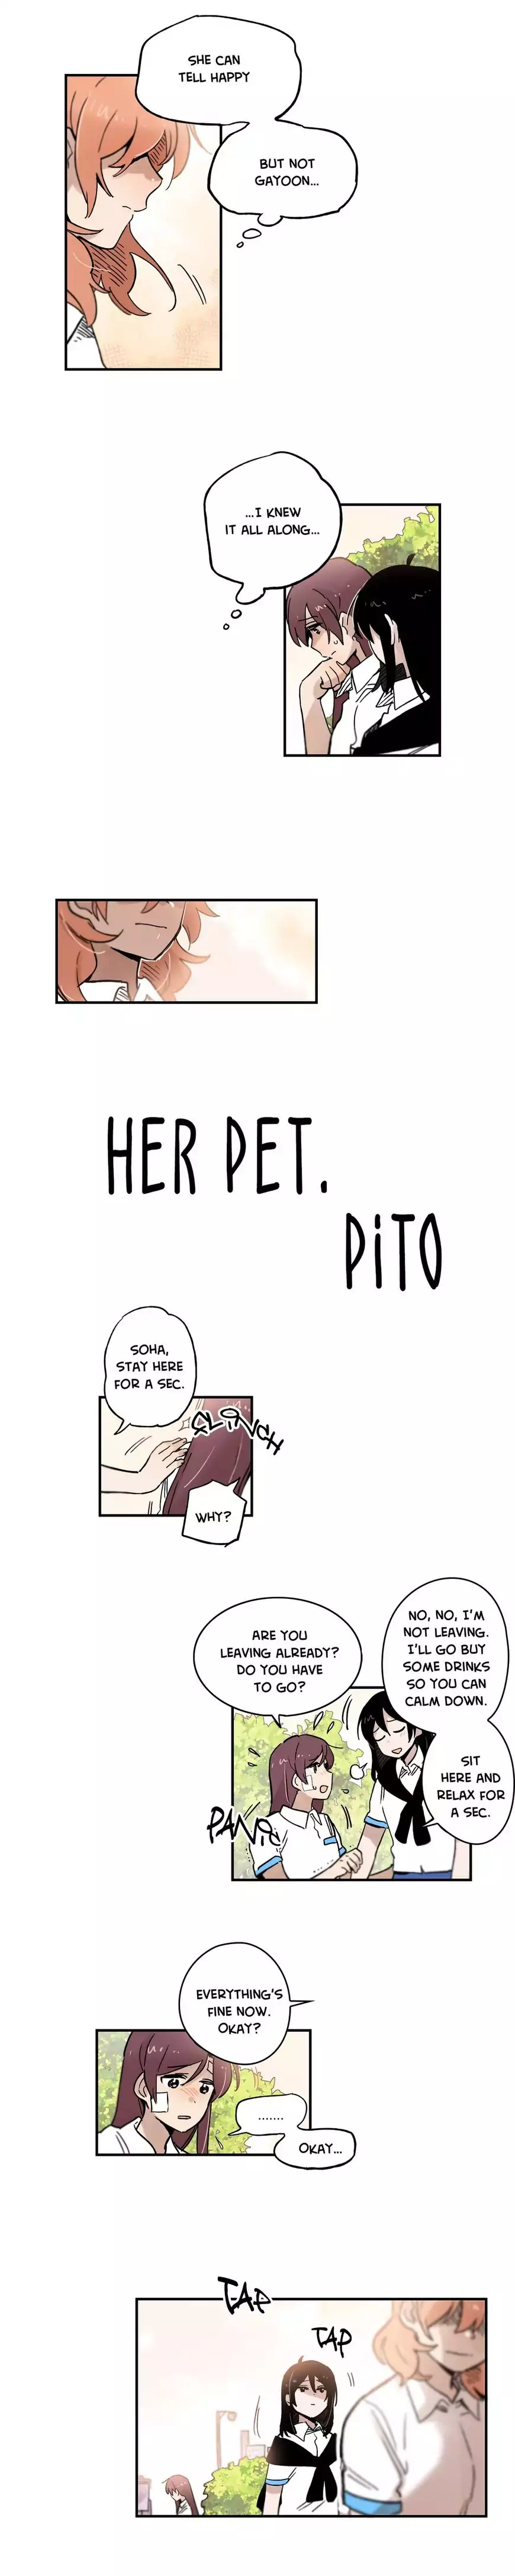 Her Pet image